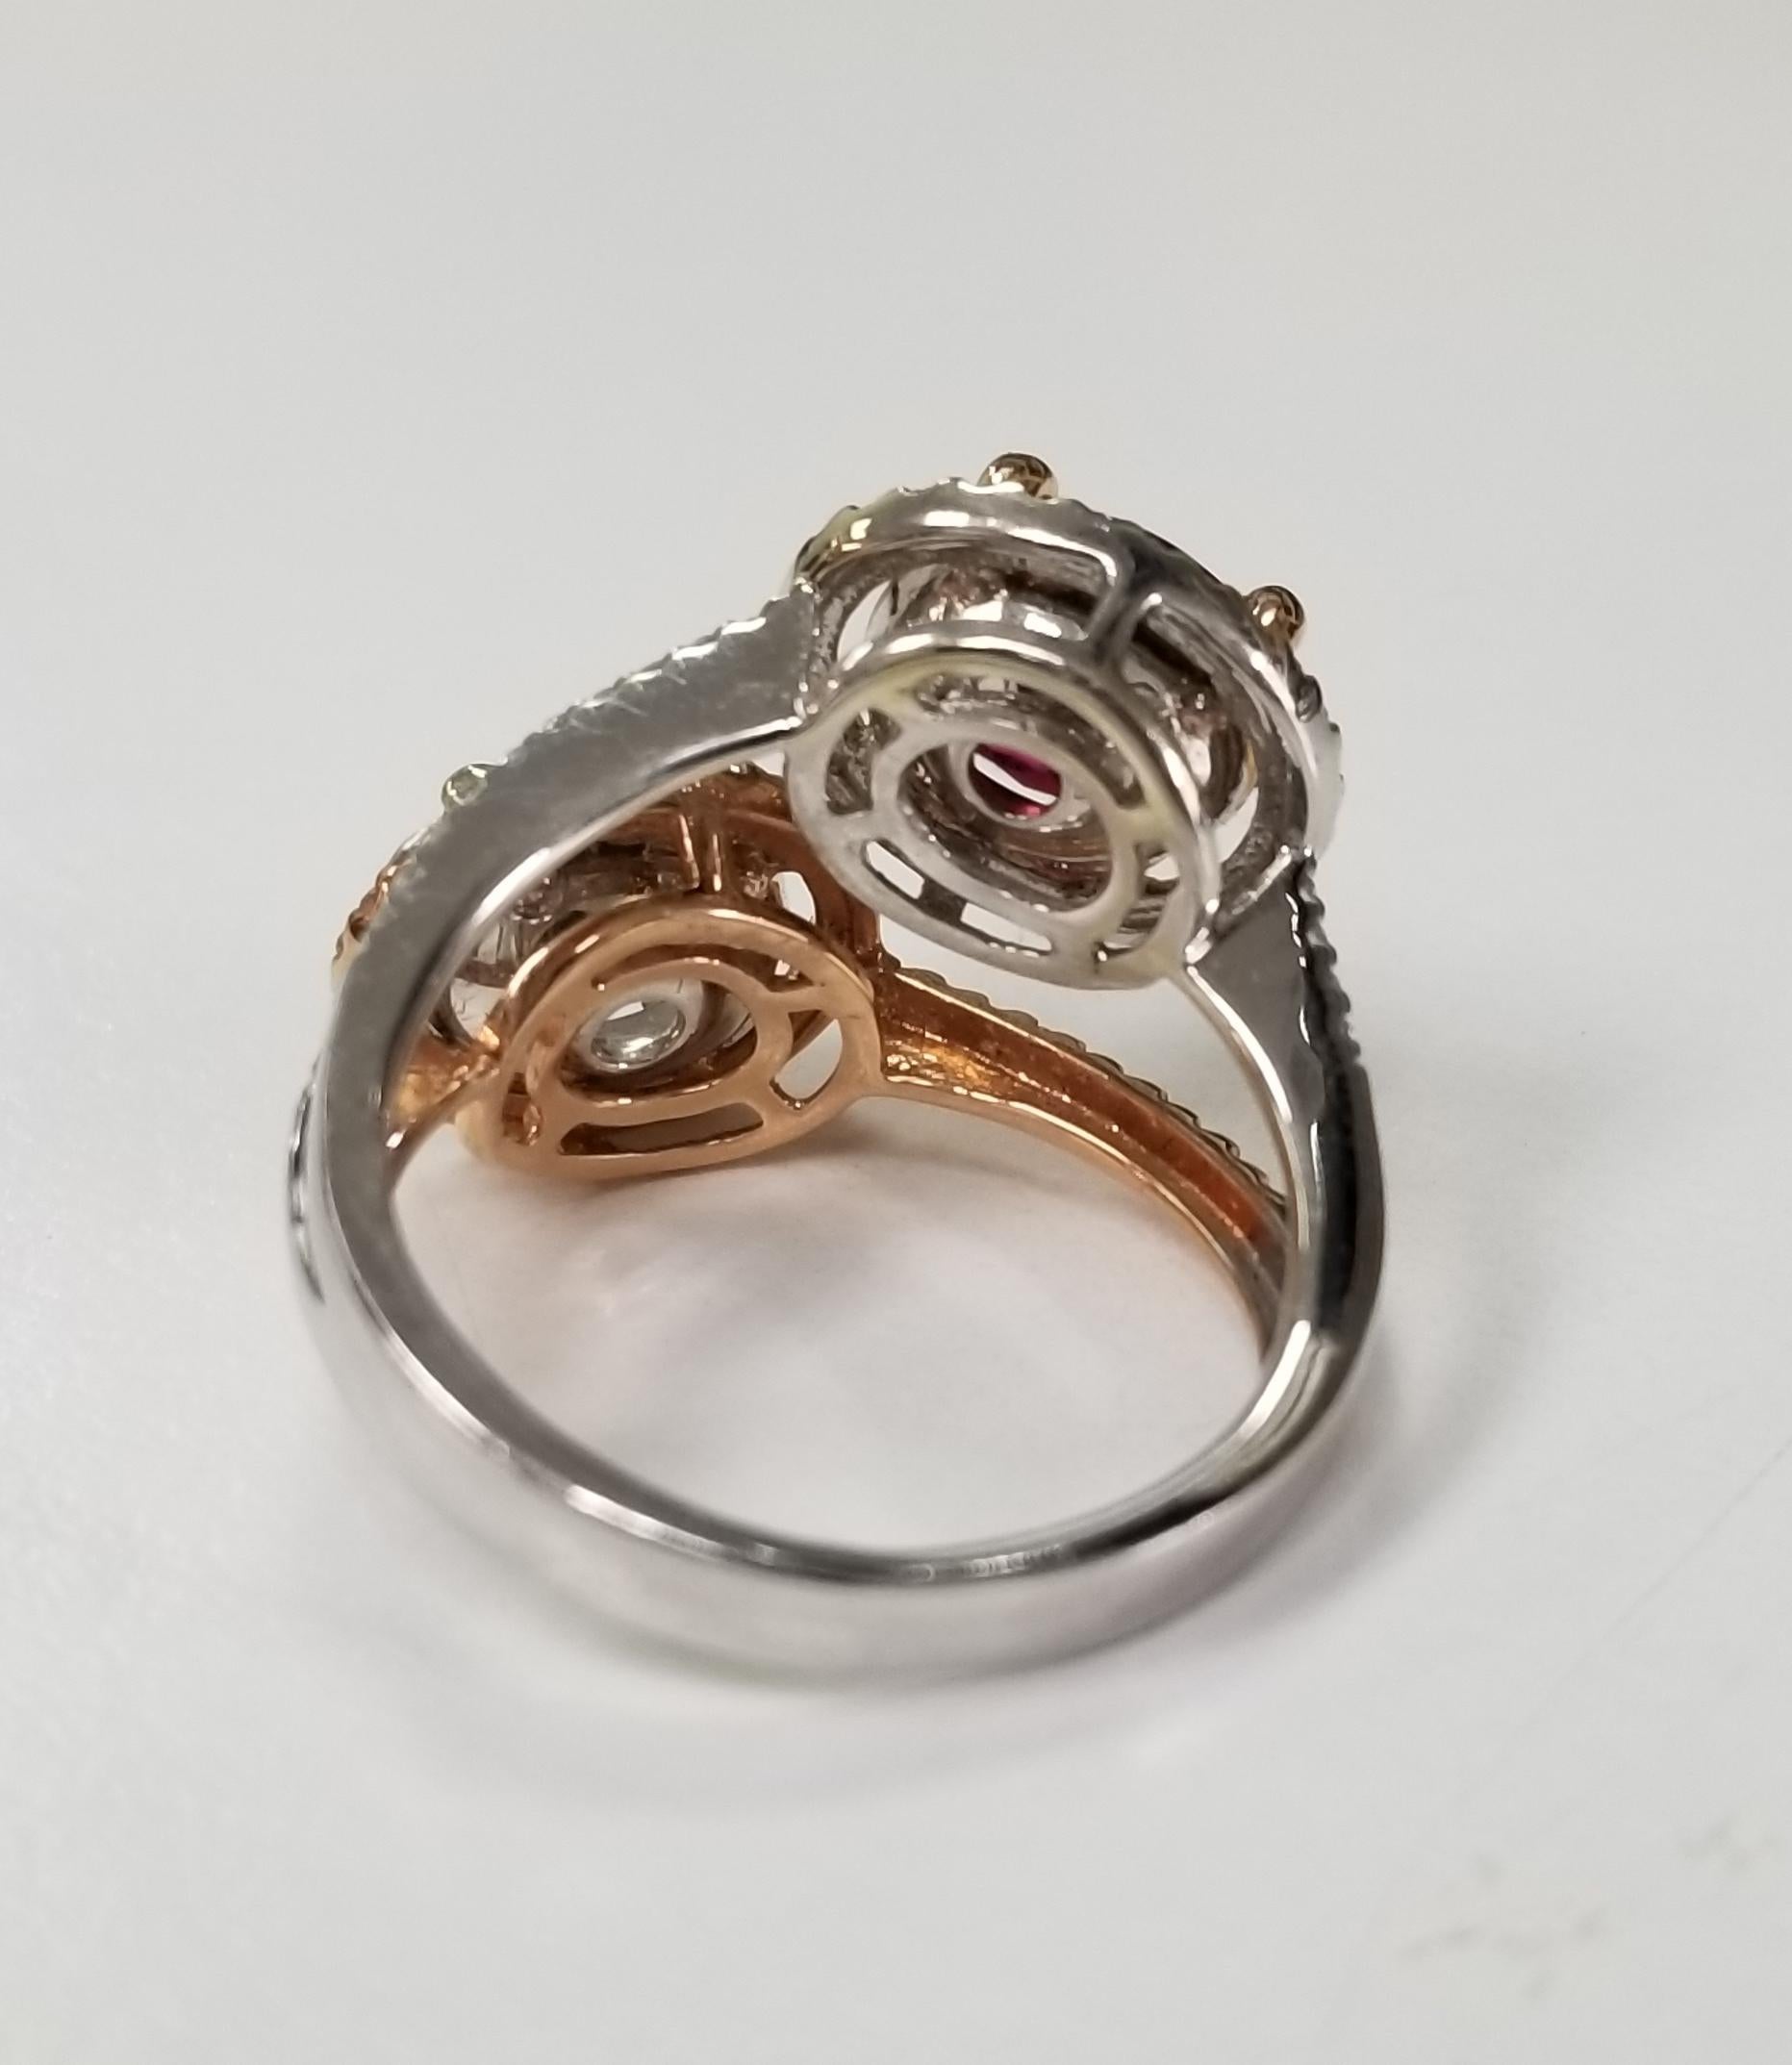 Contemporary 14 Karat White and Rose Gold Pink Tourmaline and Diamond Ring